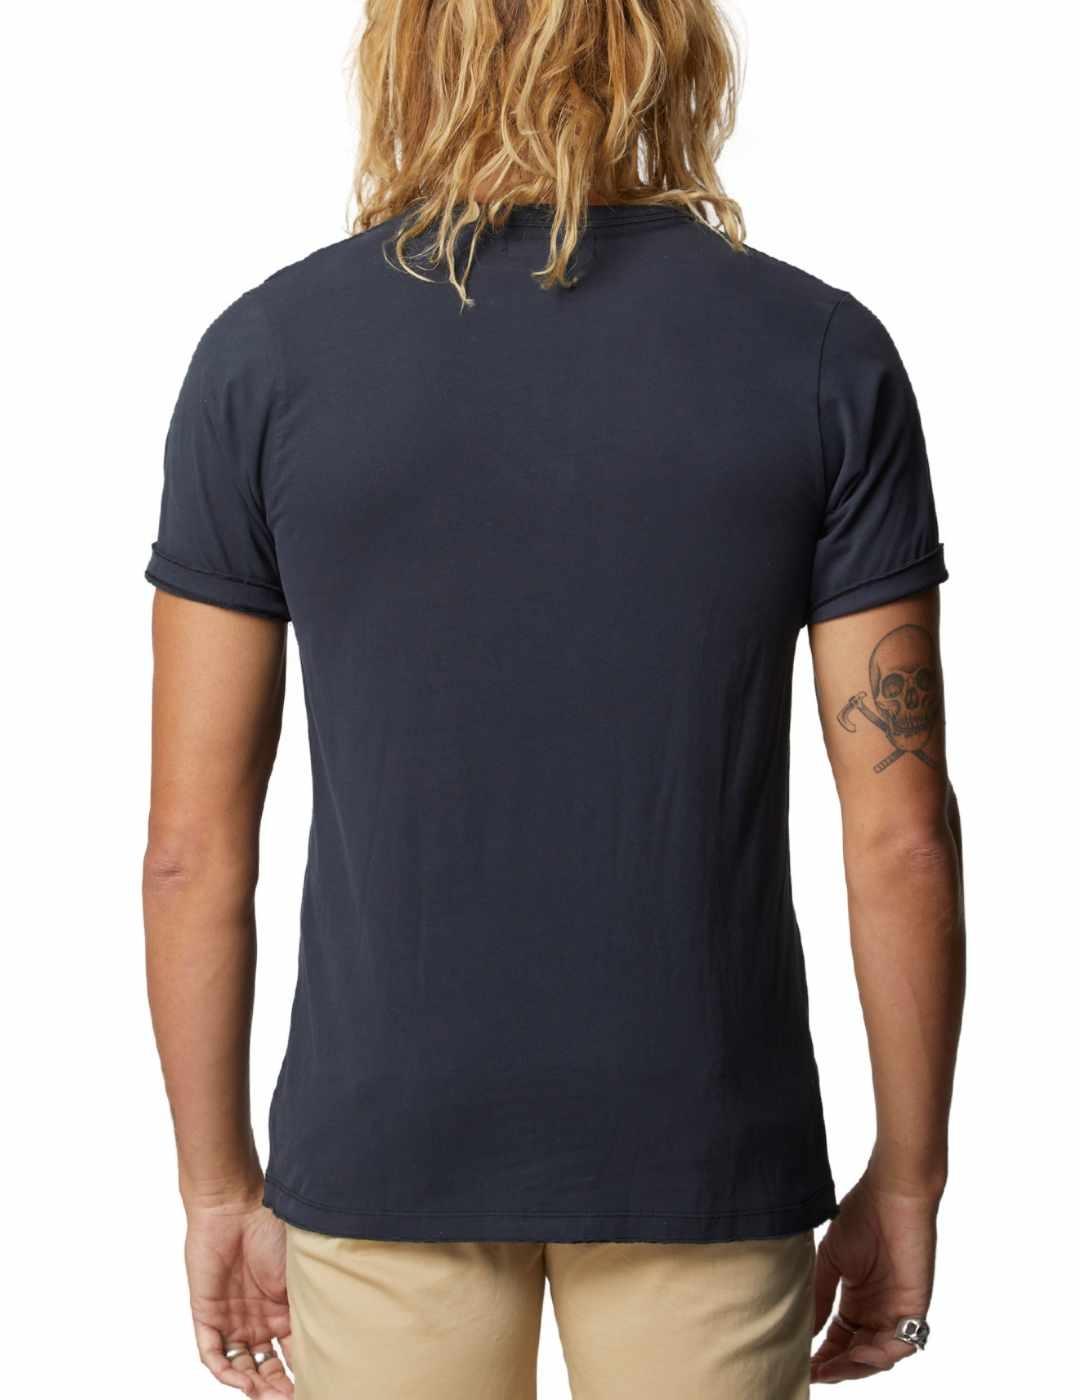 Camiseta Altonadock negro dibujo para hombre